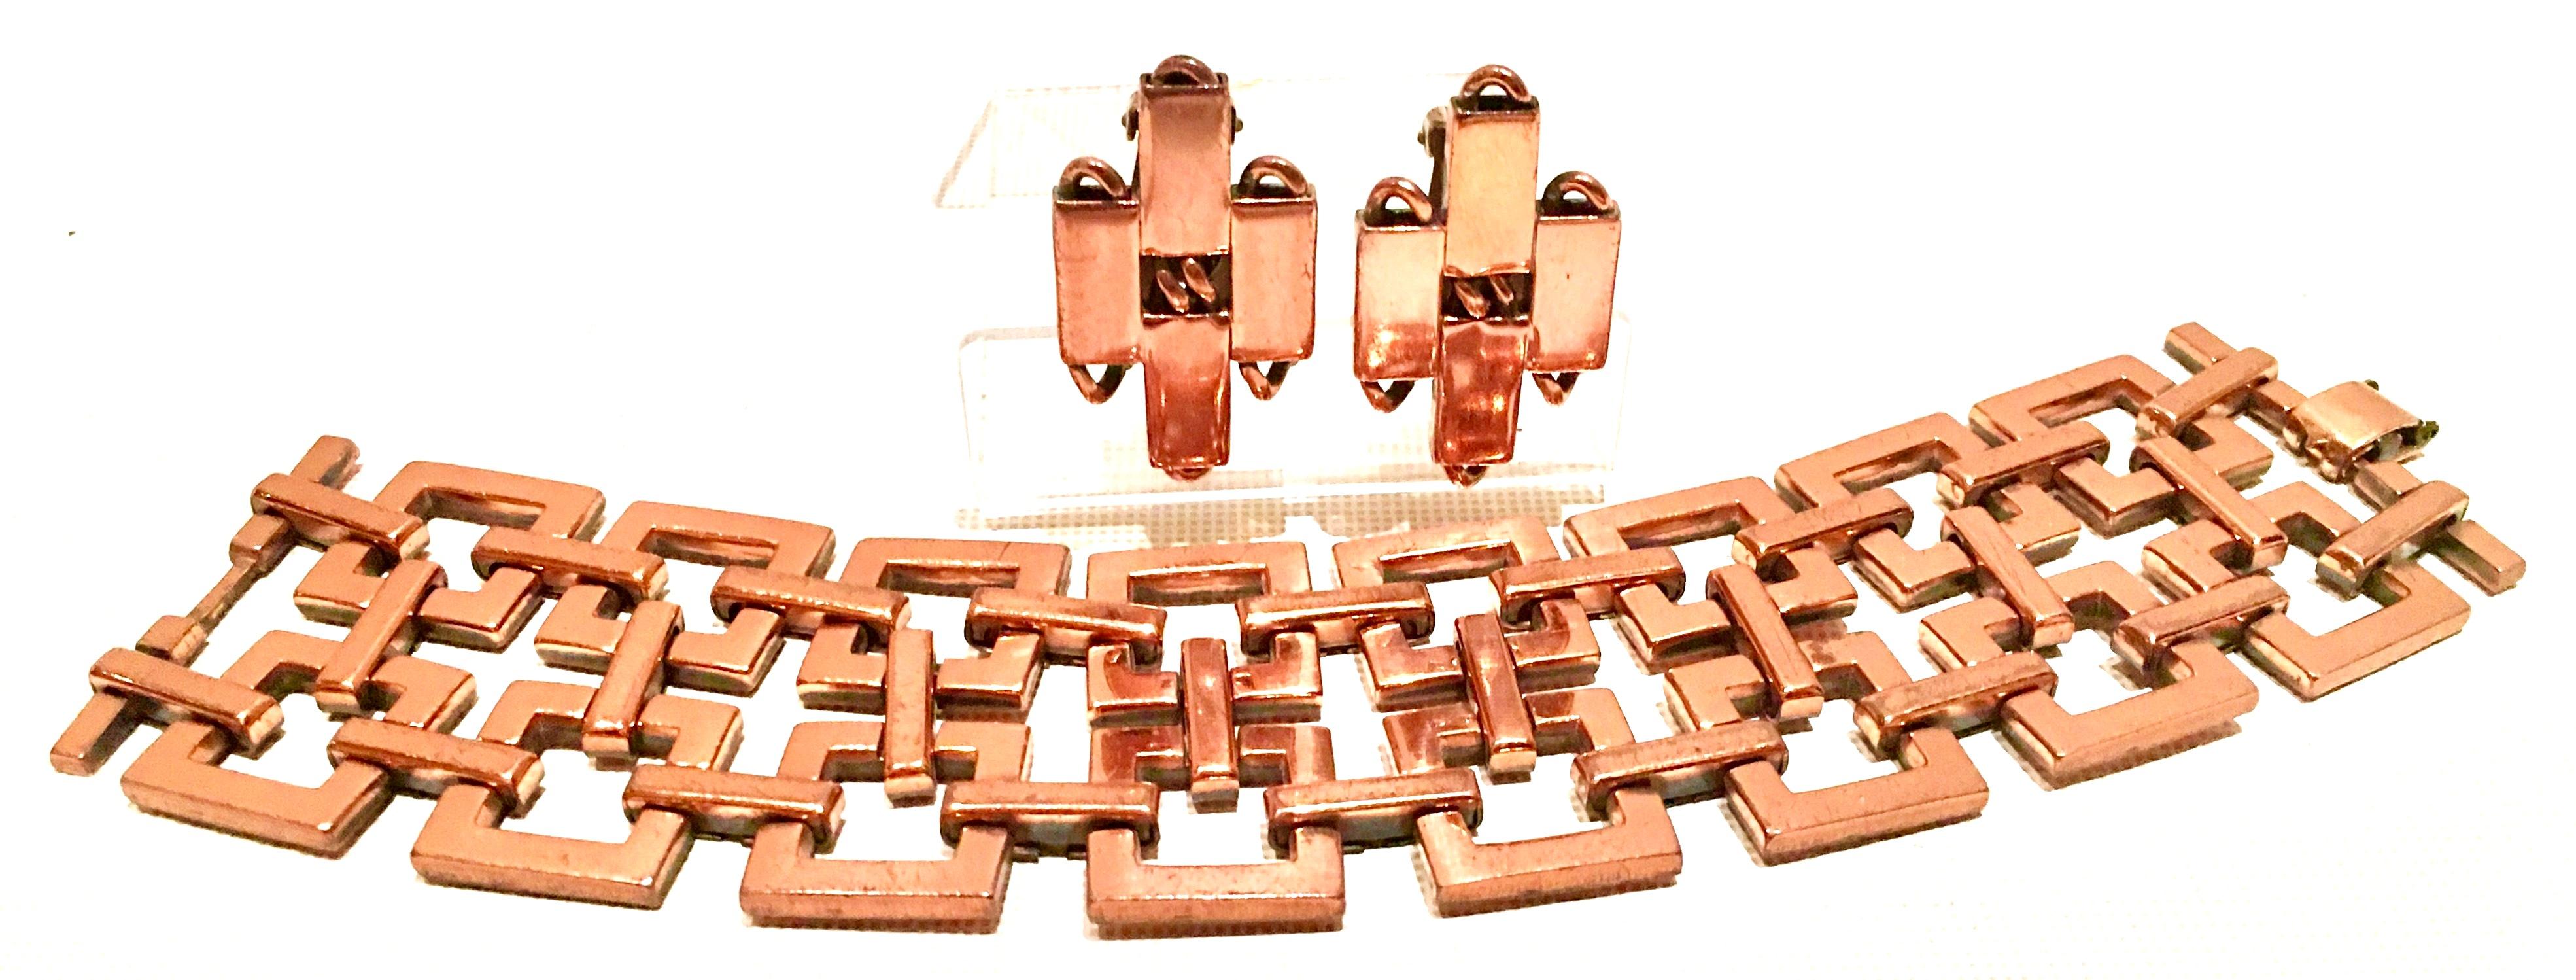 copper chain link bracelet